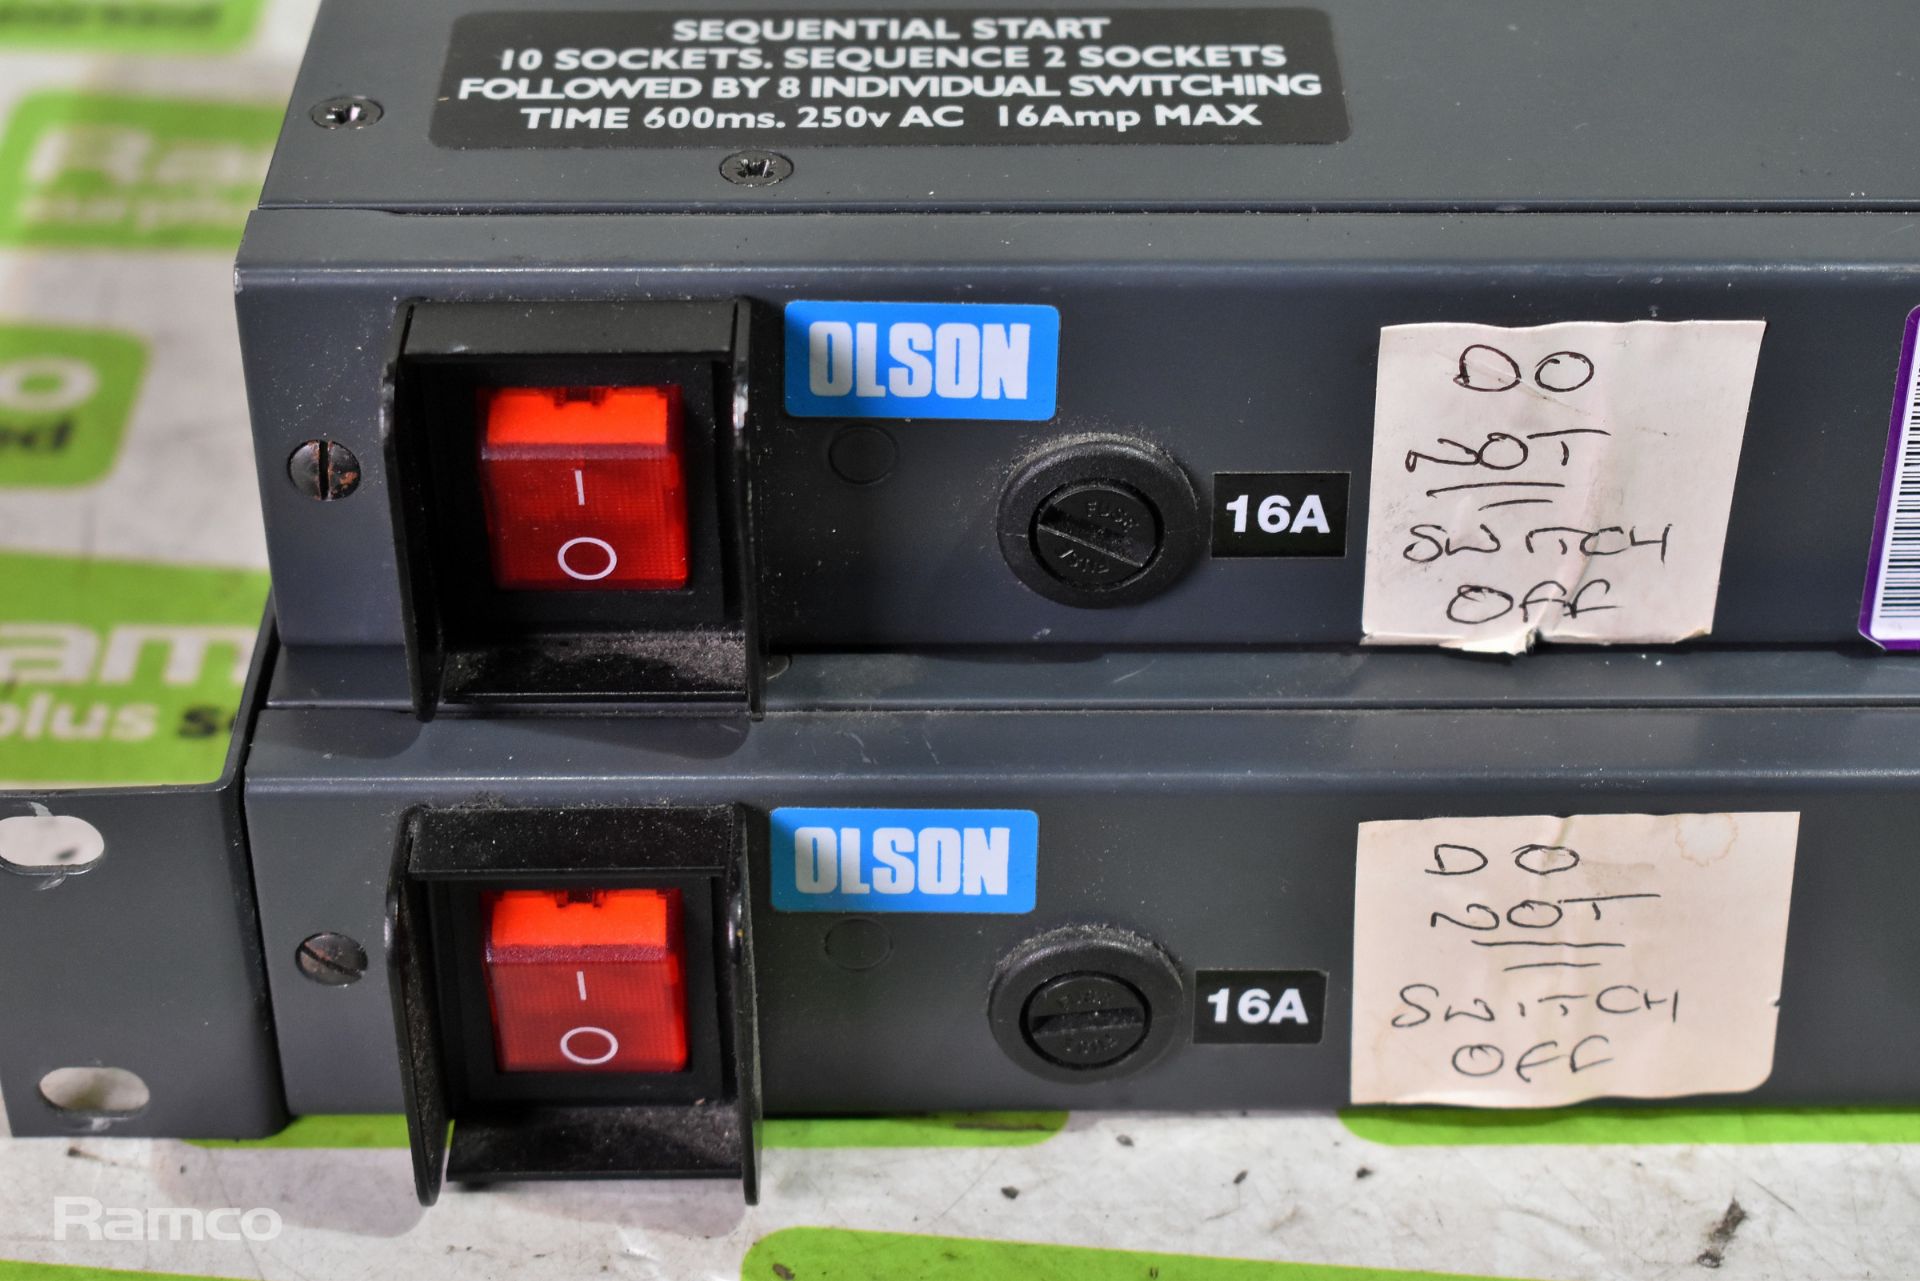 Olson PDU 16A to IEC power distribution unit, Olson PDU 16A to IEC power distribution unit - Image 2 of 4